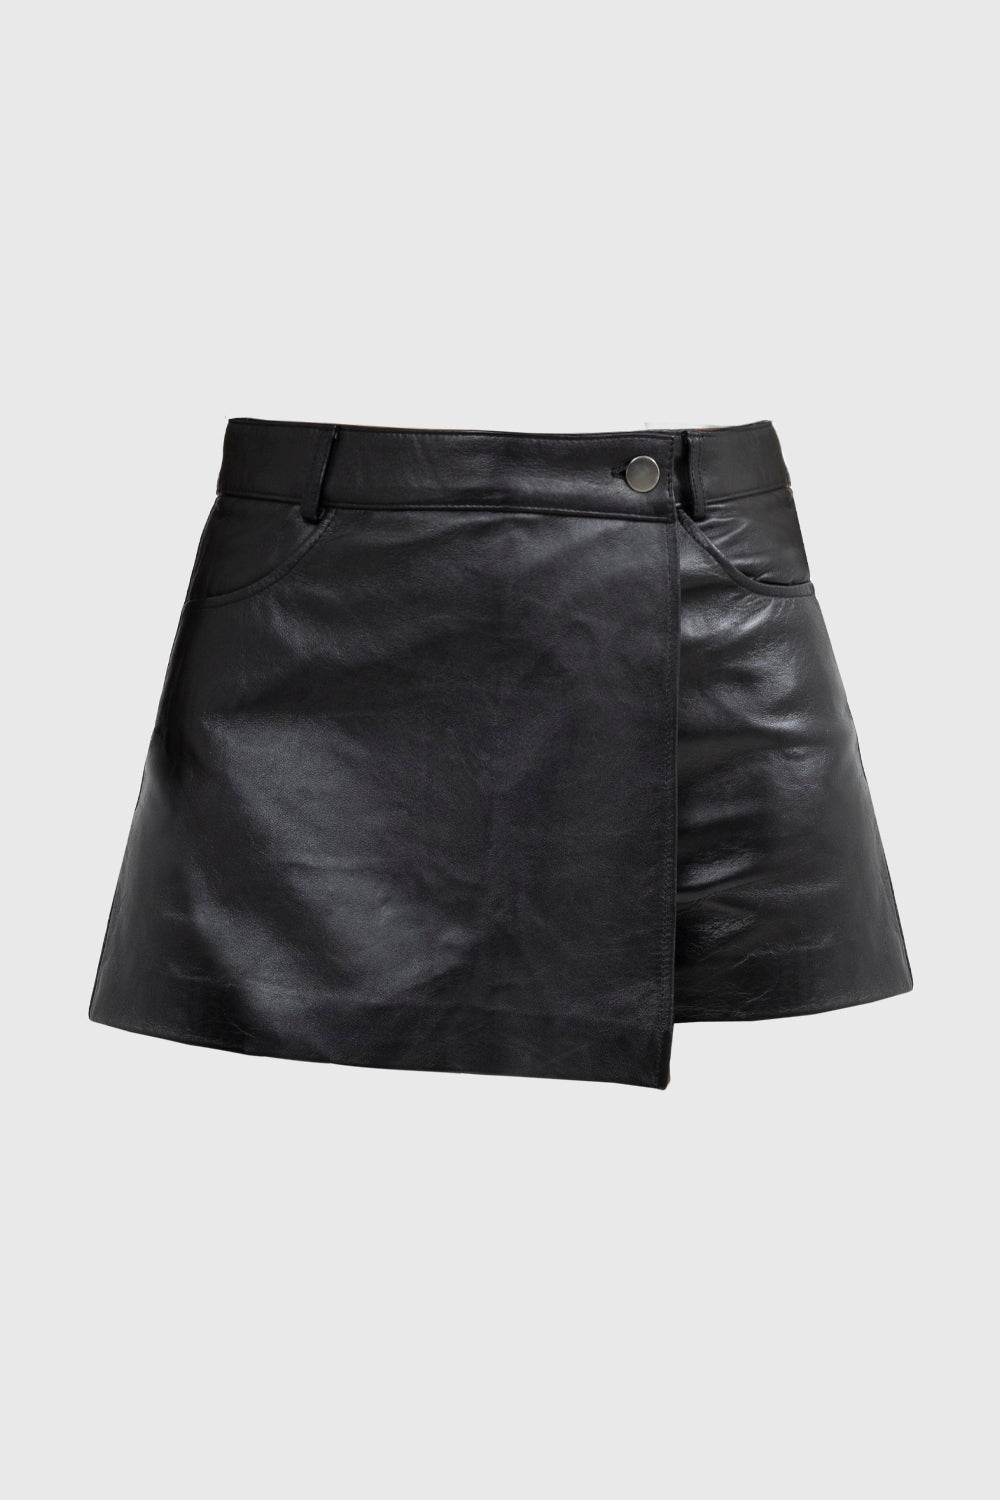 Jade Fashion Leather Skort (POS)  Whet Blu NYC 0 Black 